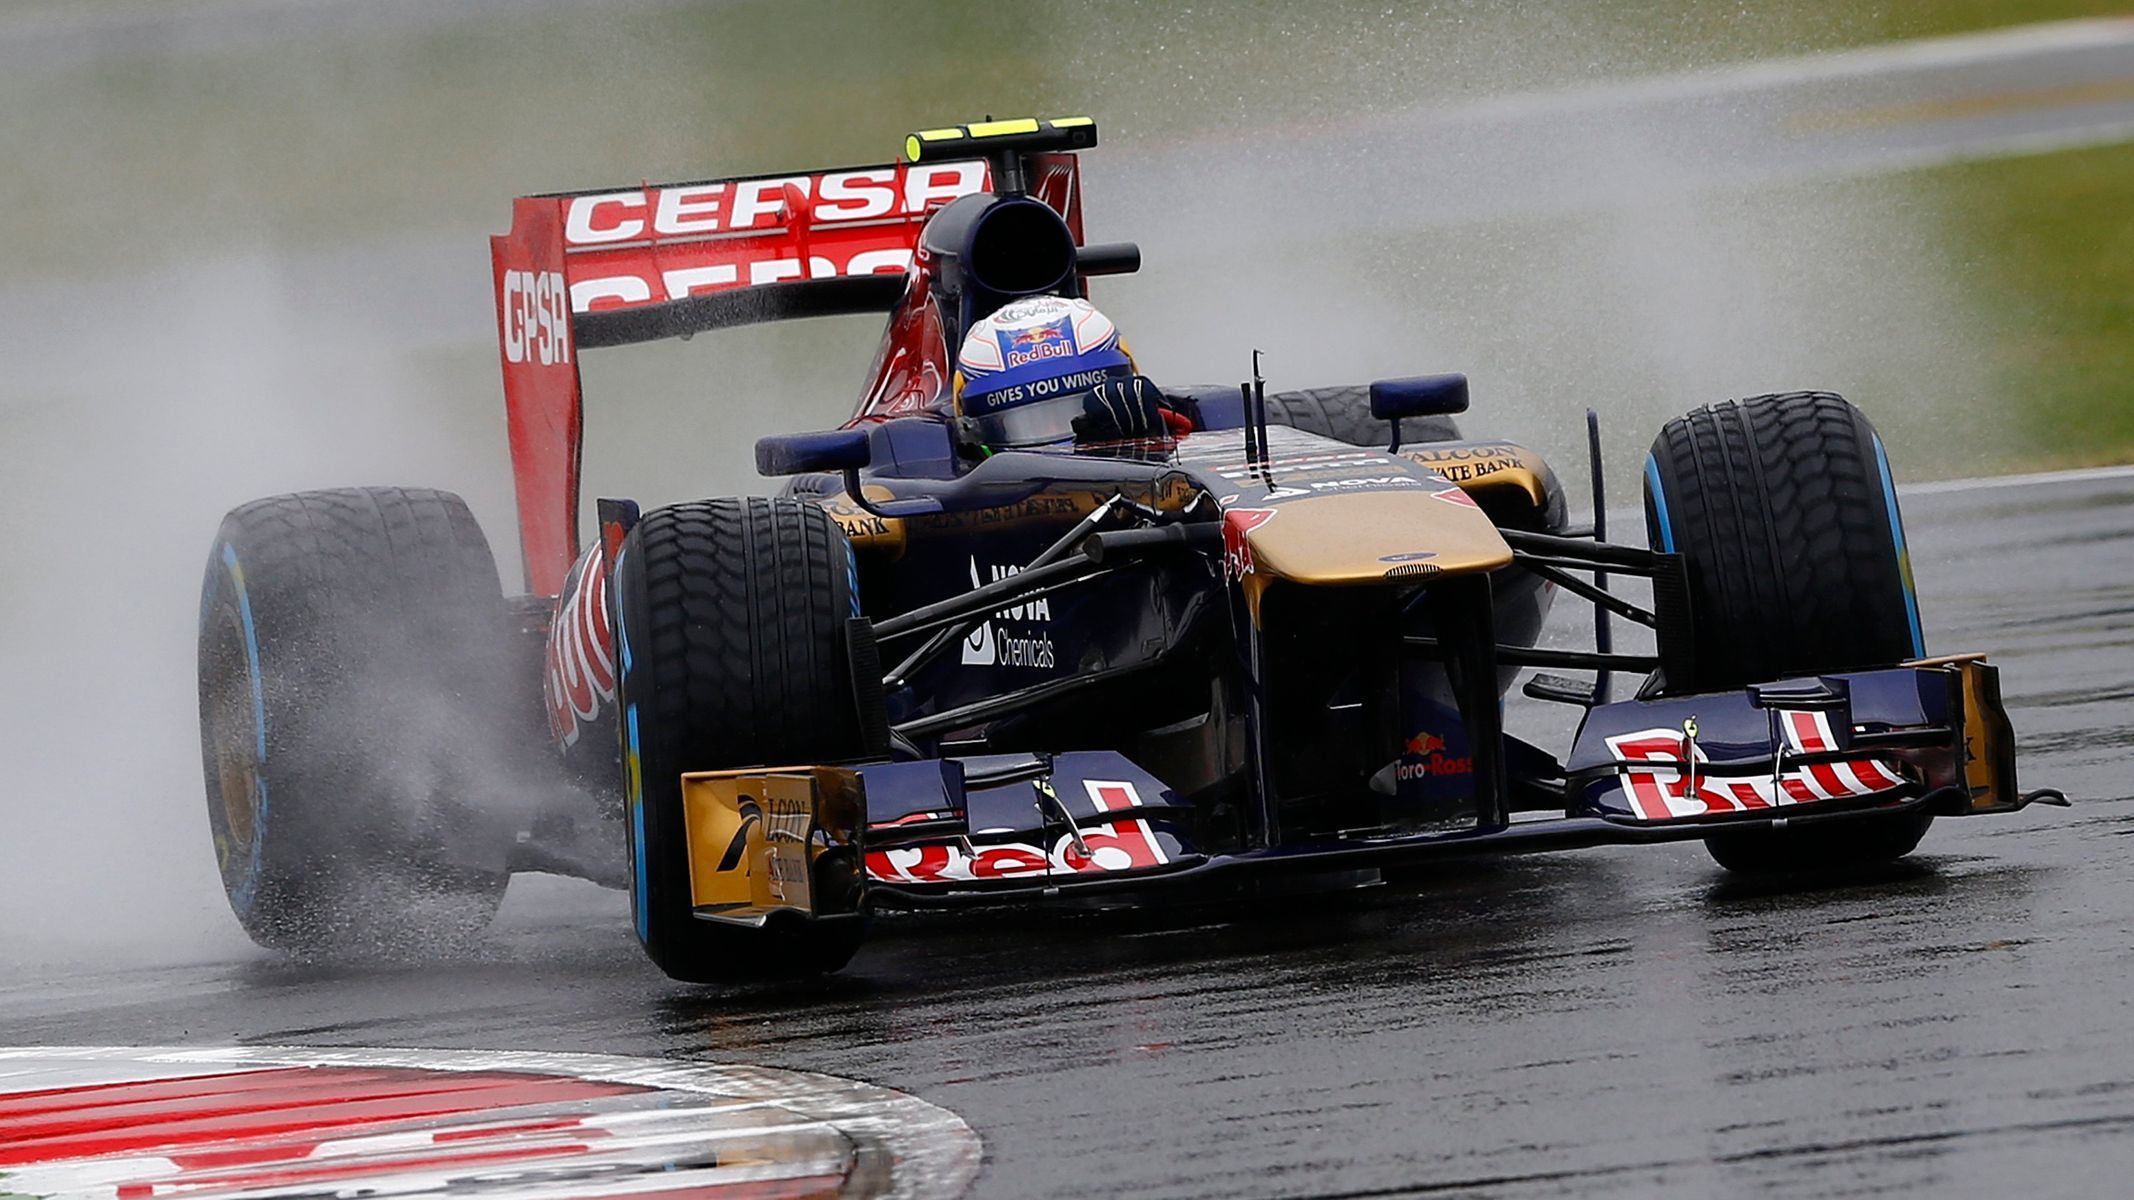 Toro Rosso Formula One driver Ricciardo of Australia takes c